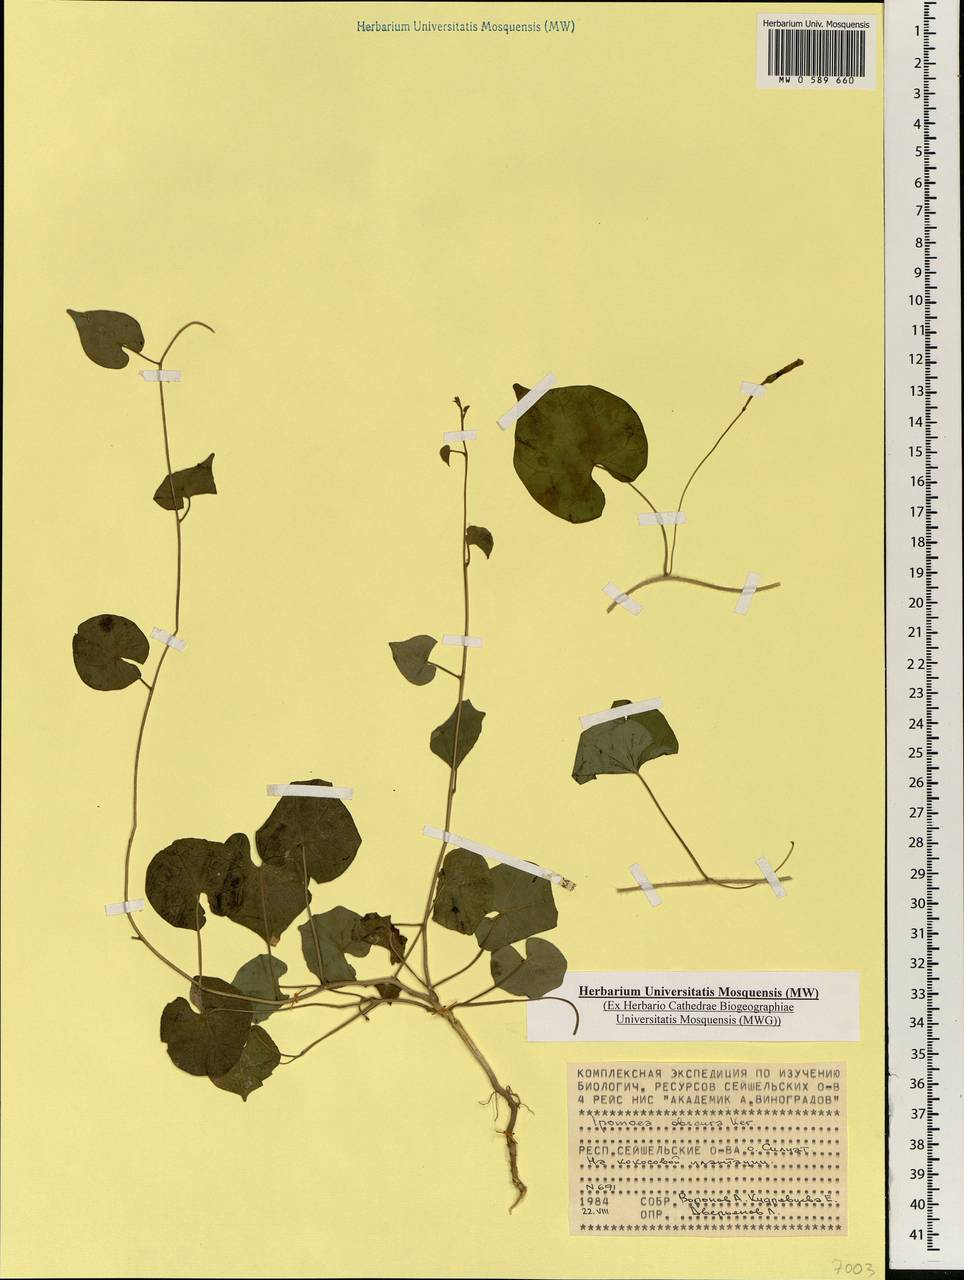 Ipomoea obscura (L.) Ker Gawl., Африка (AFR) (Сейшельские острова)